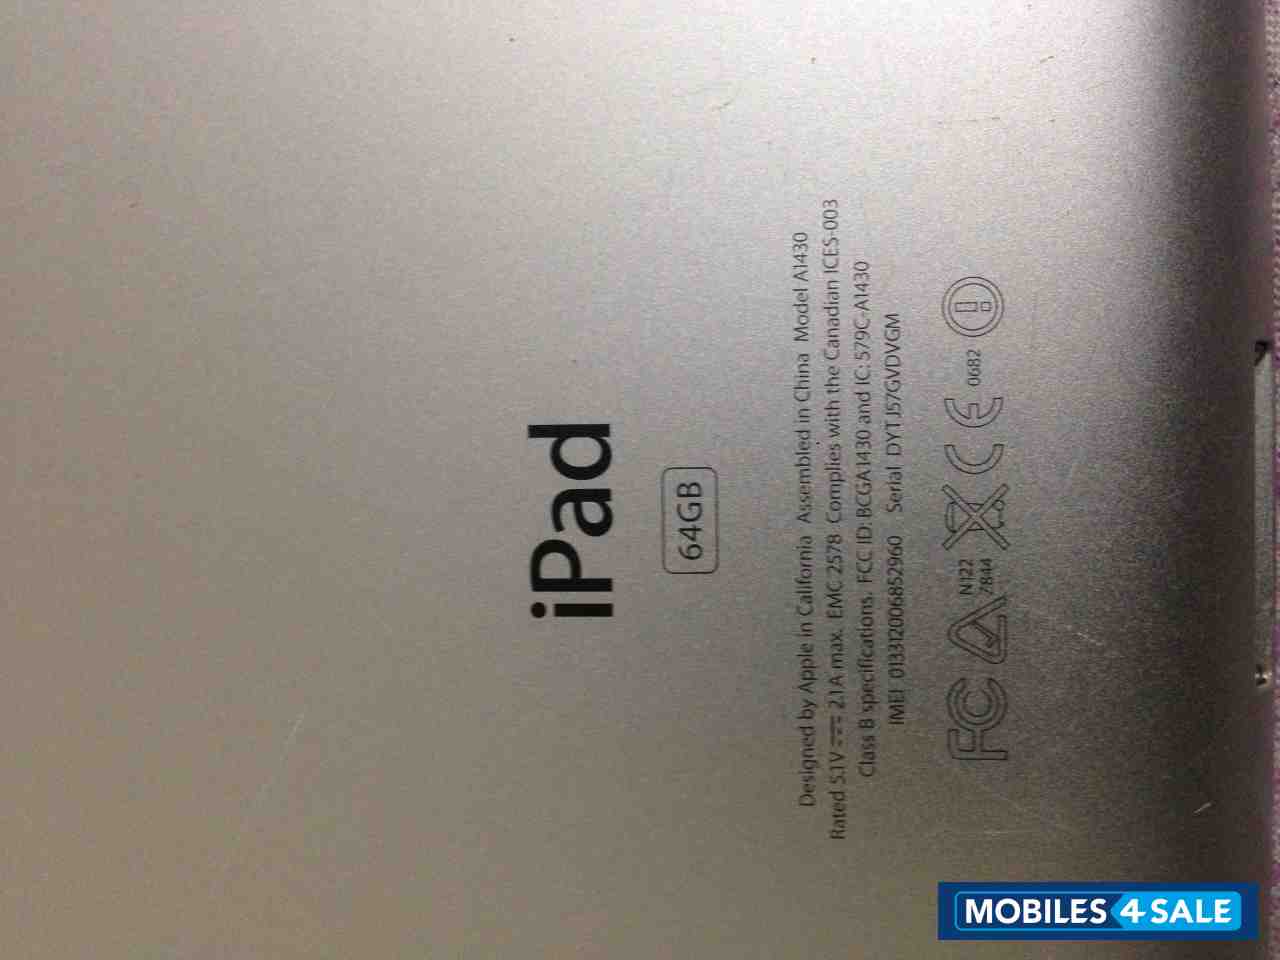 White Apple iPad Mini 3 Wi-Fi Cellular